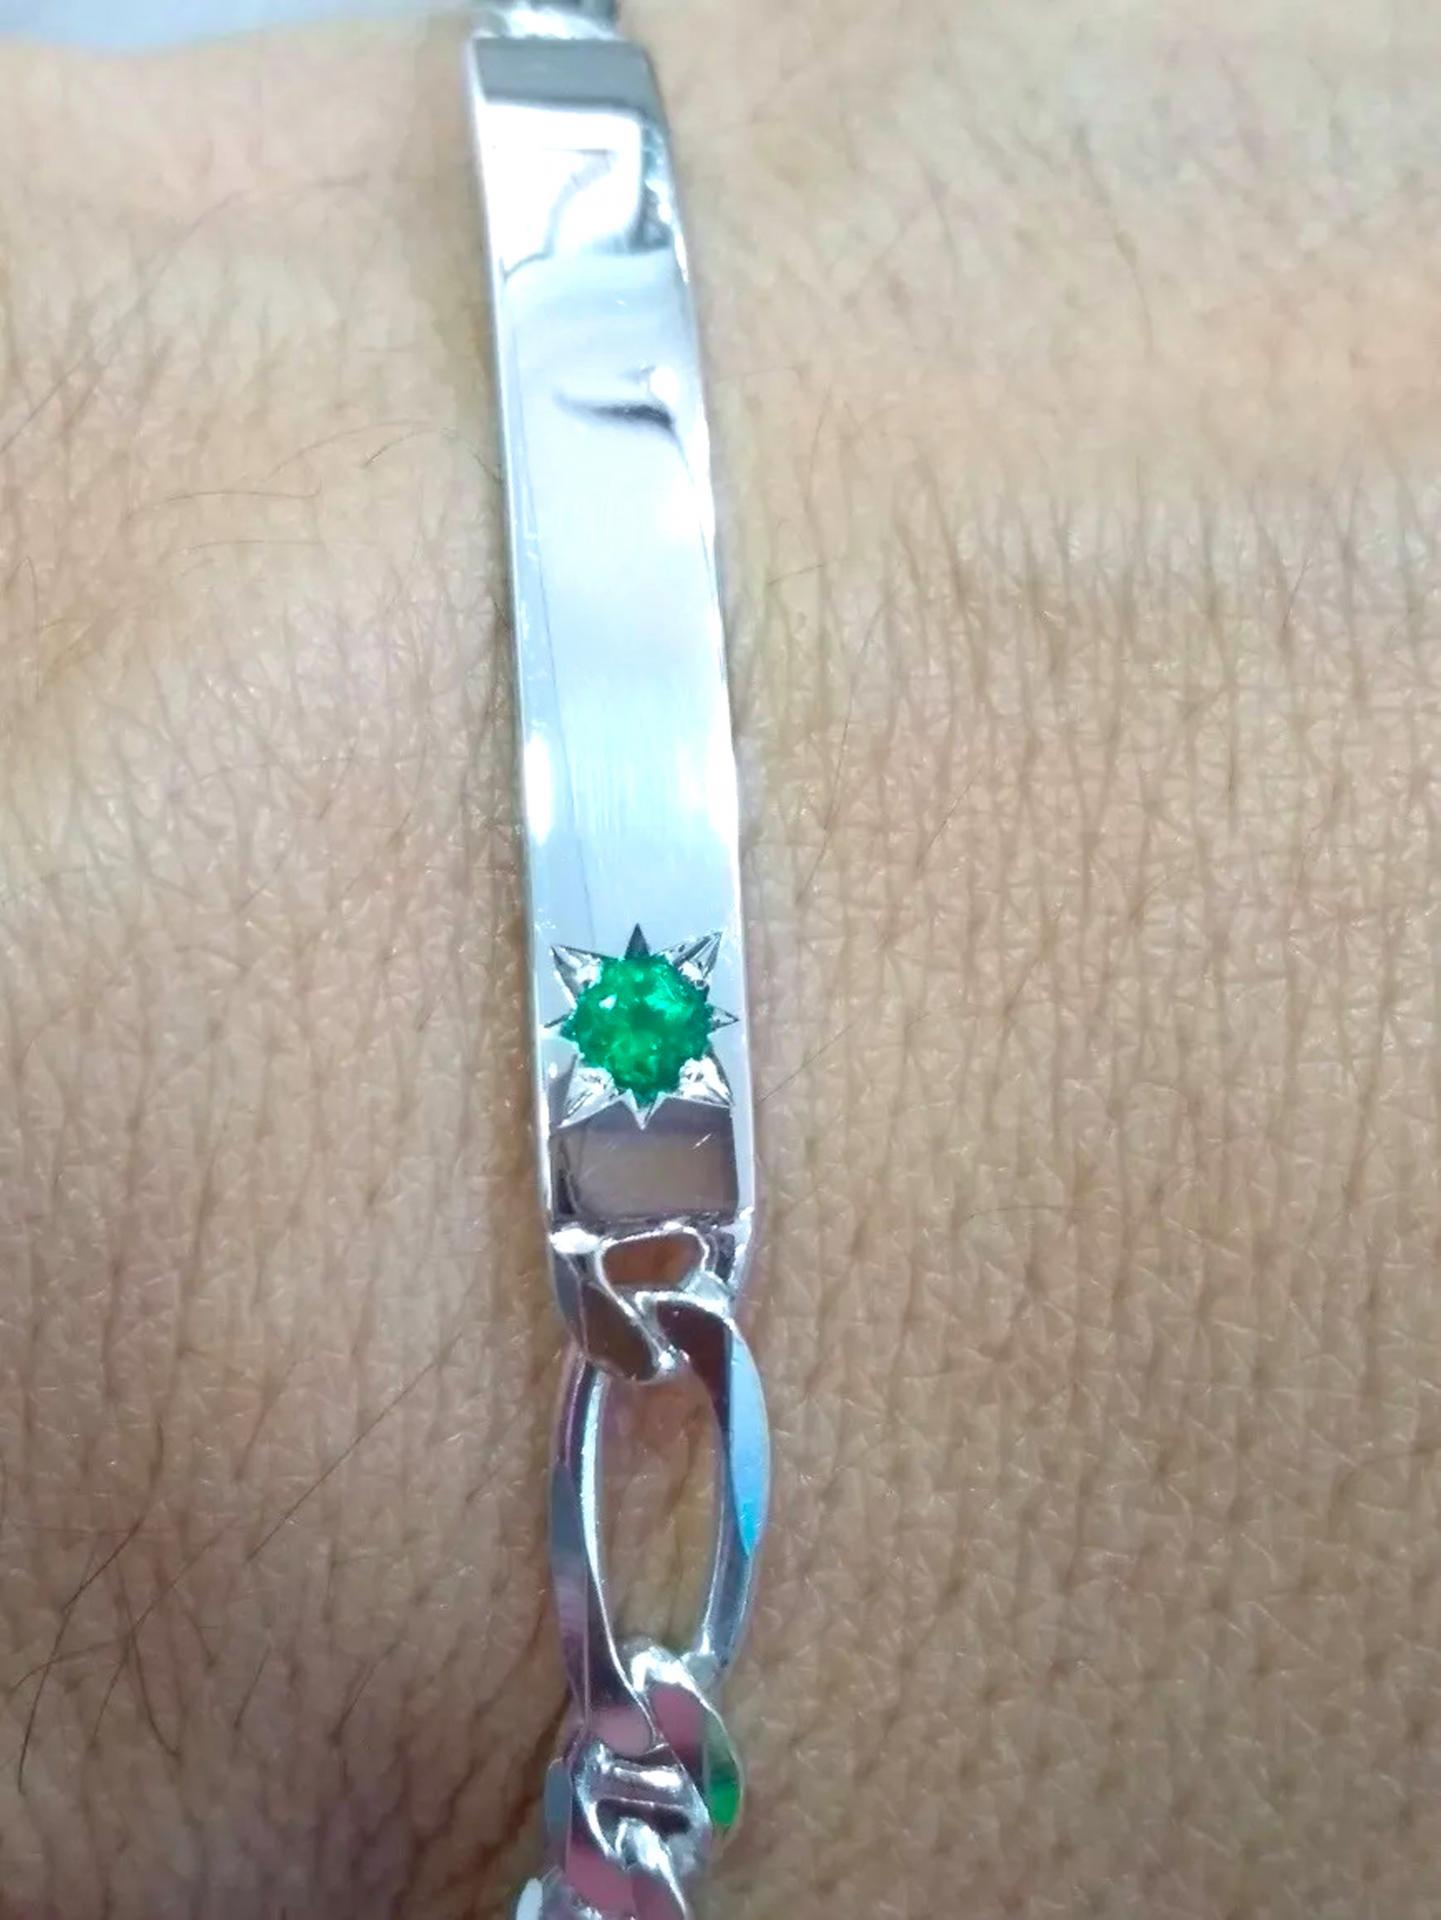 925 Silver Emerald Bracelet with Emerald 